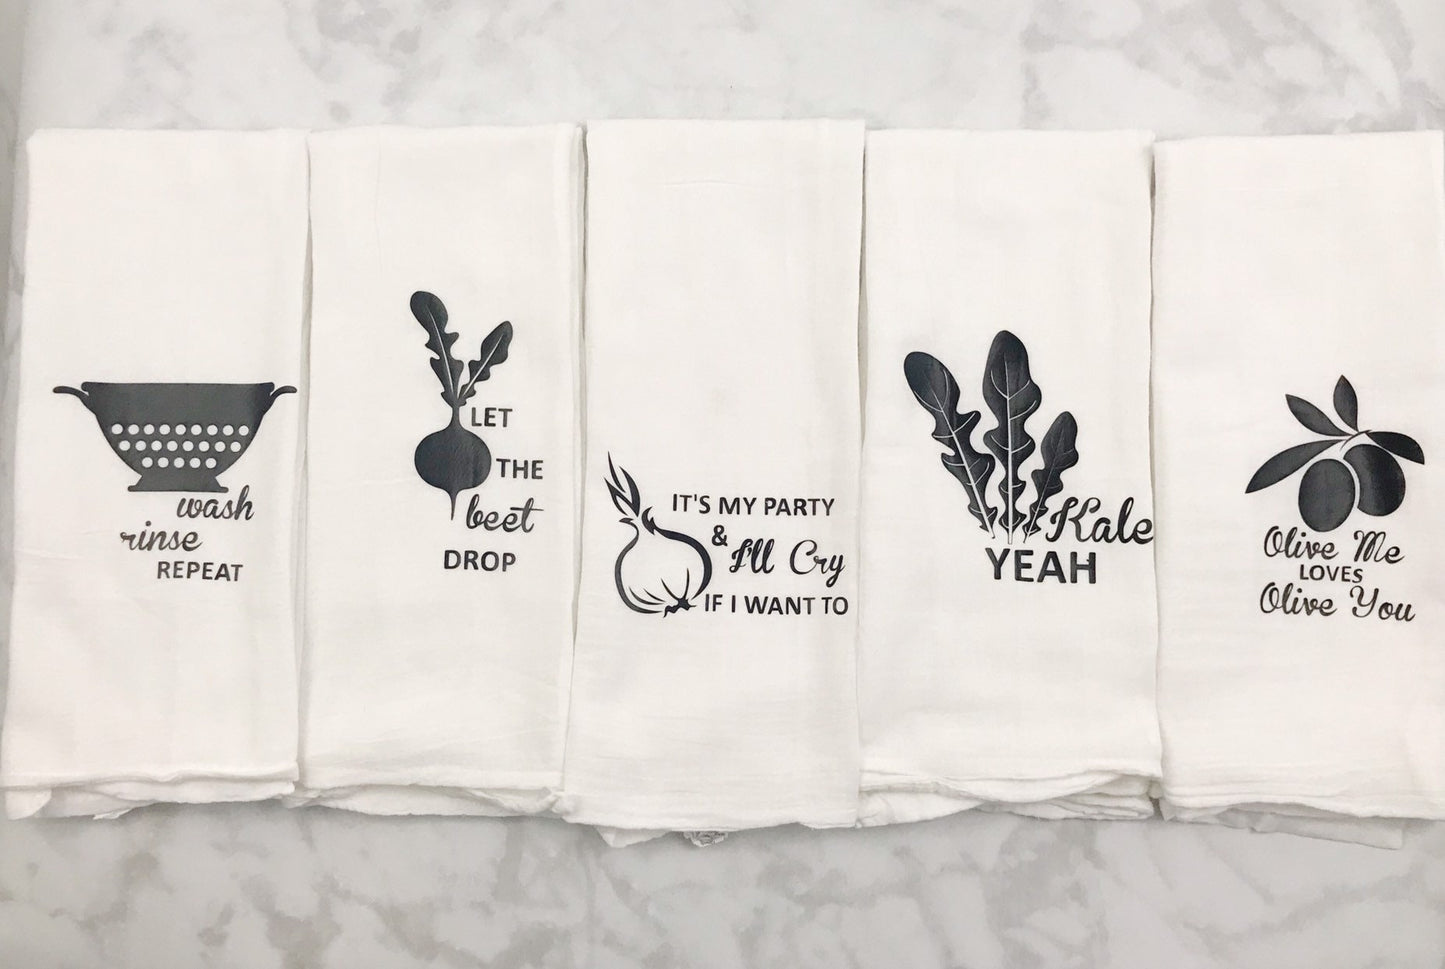 Funny Flour Sack Tea Towels – Simply Northwest